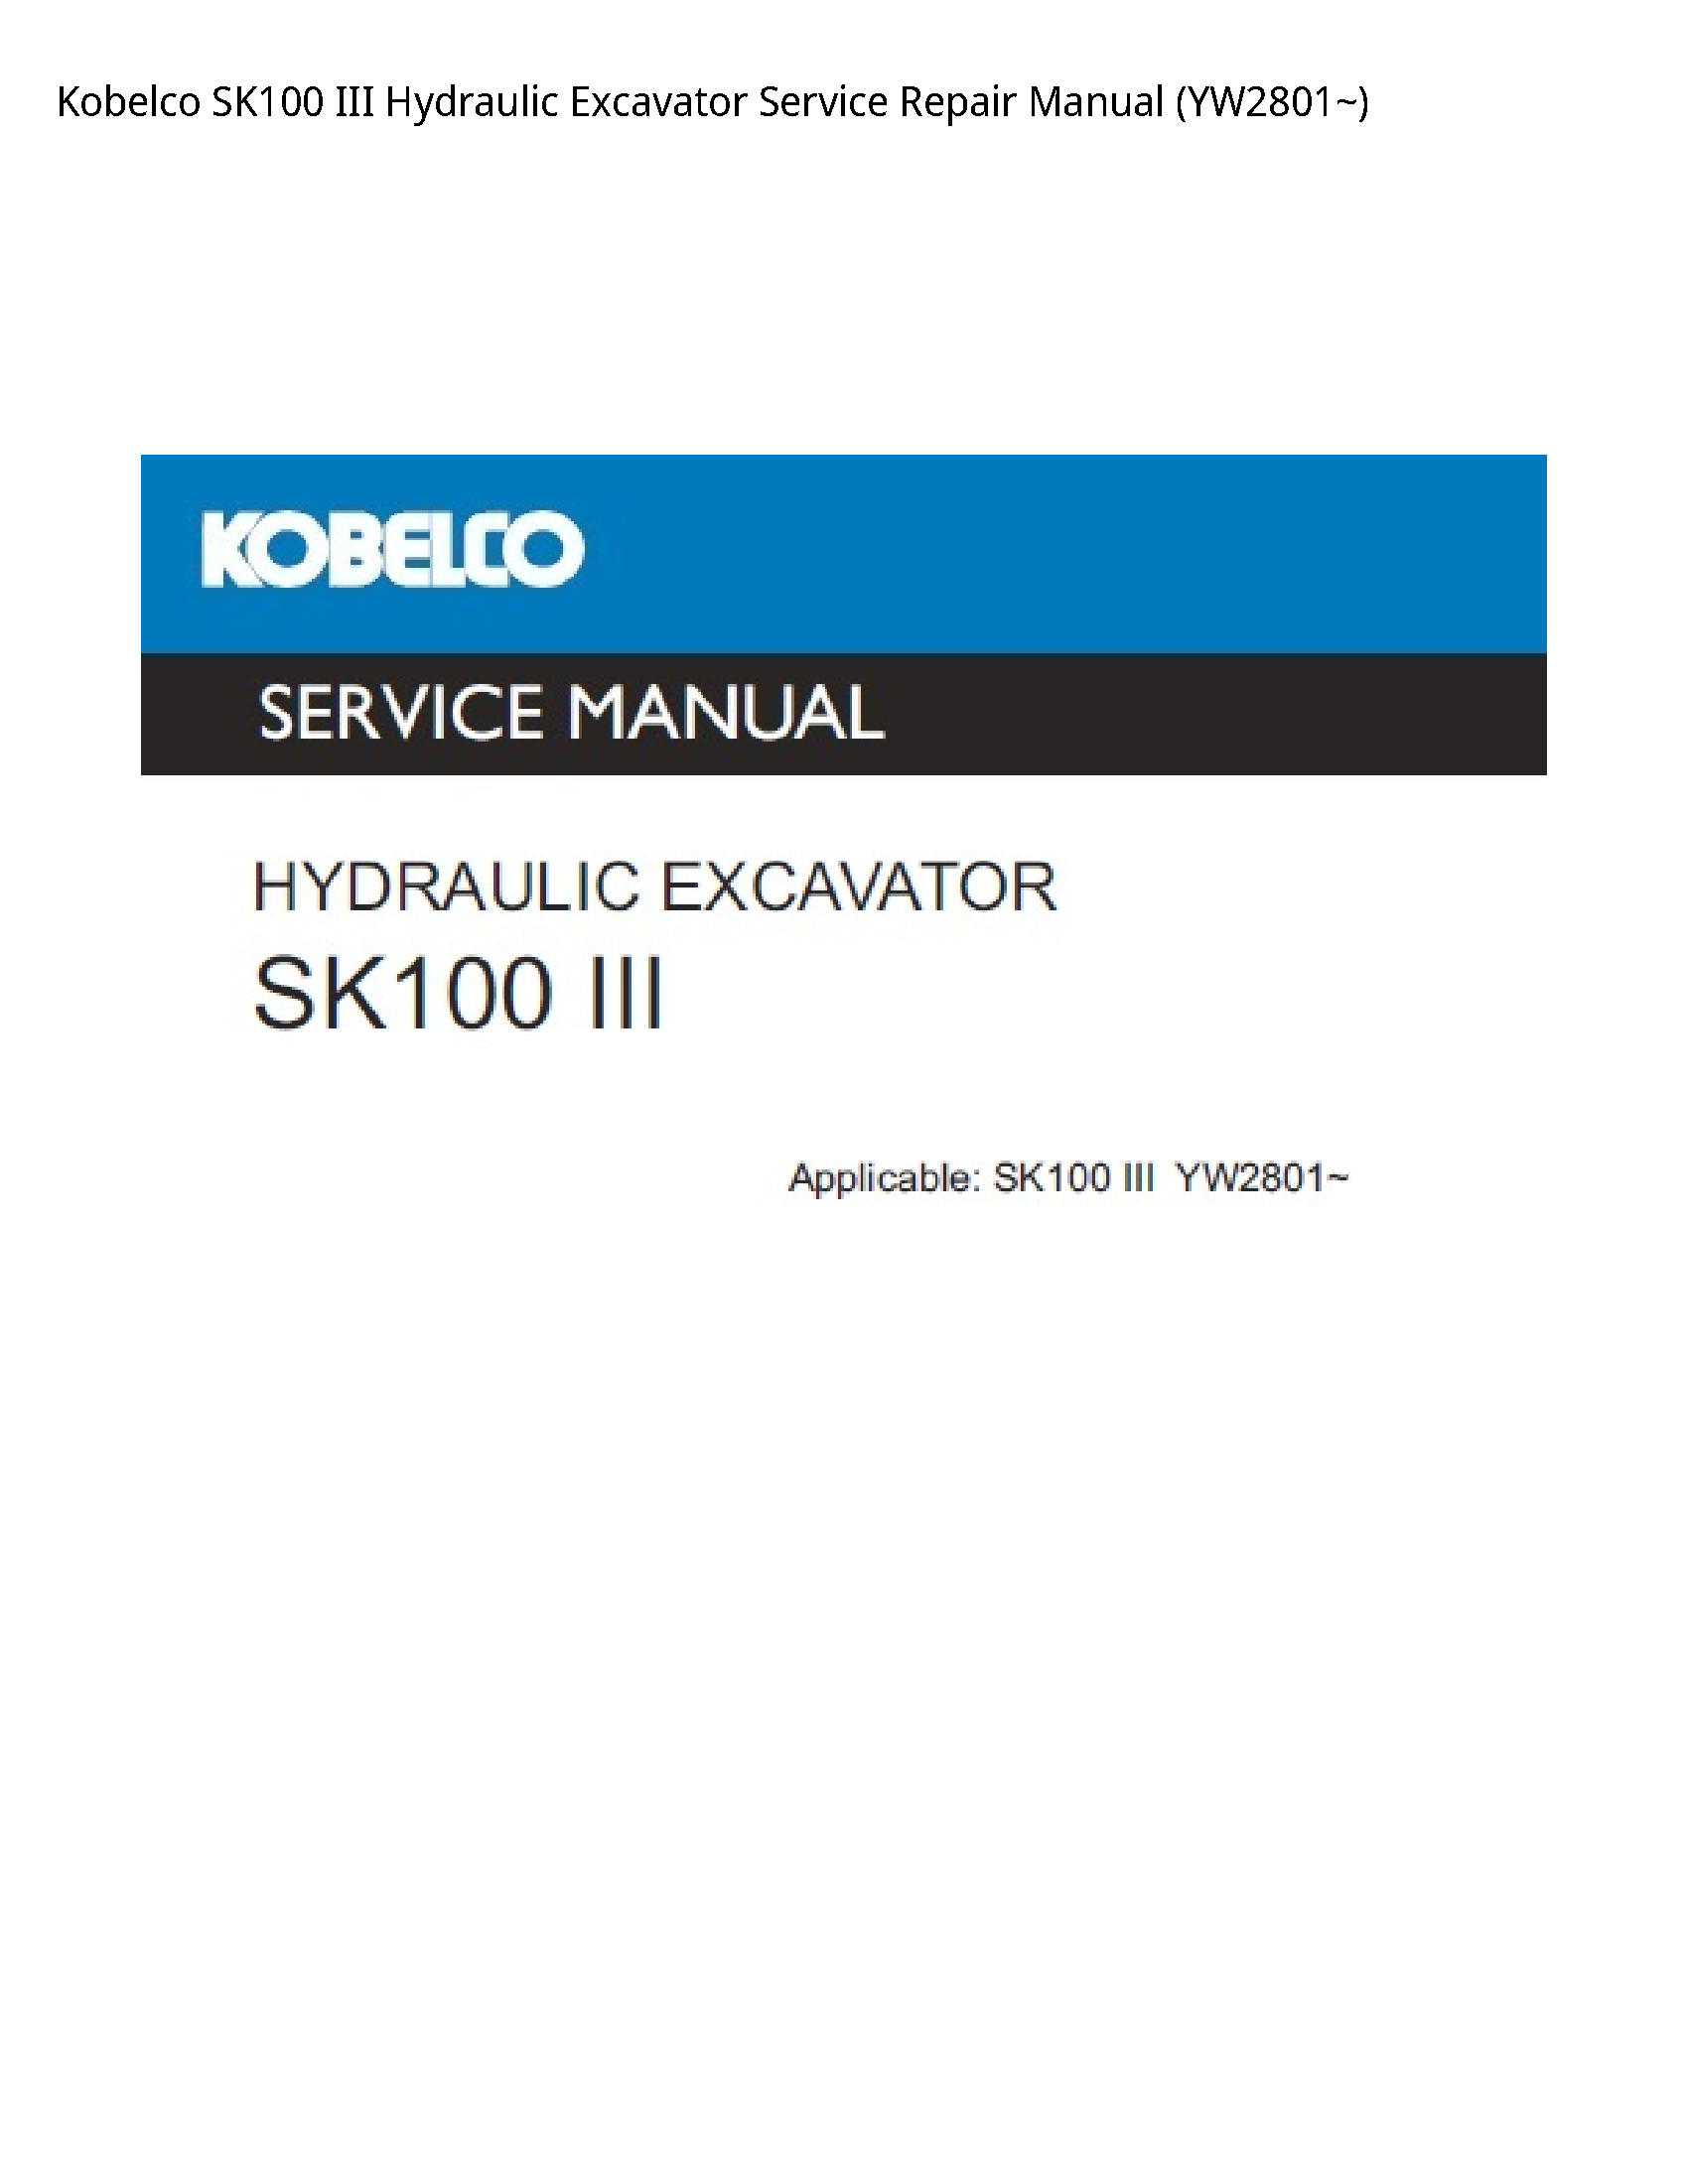 Kobelco SK100 III Hydraulic Excavator manual